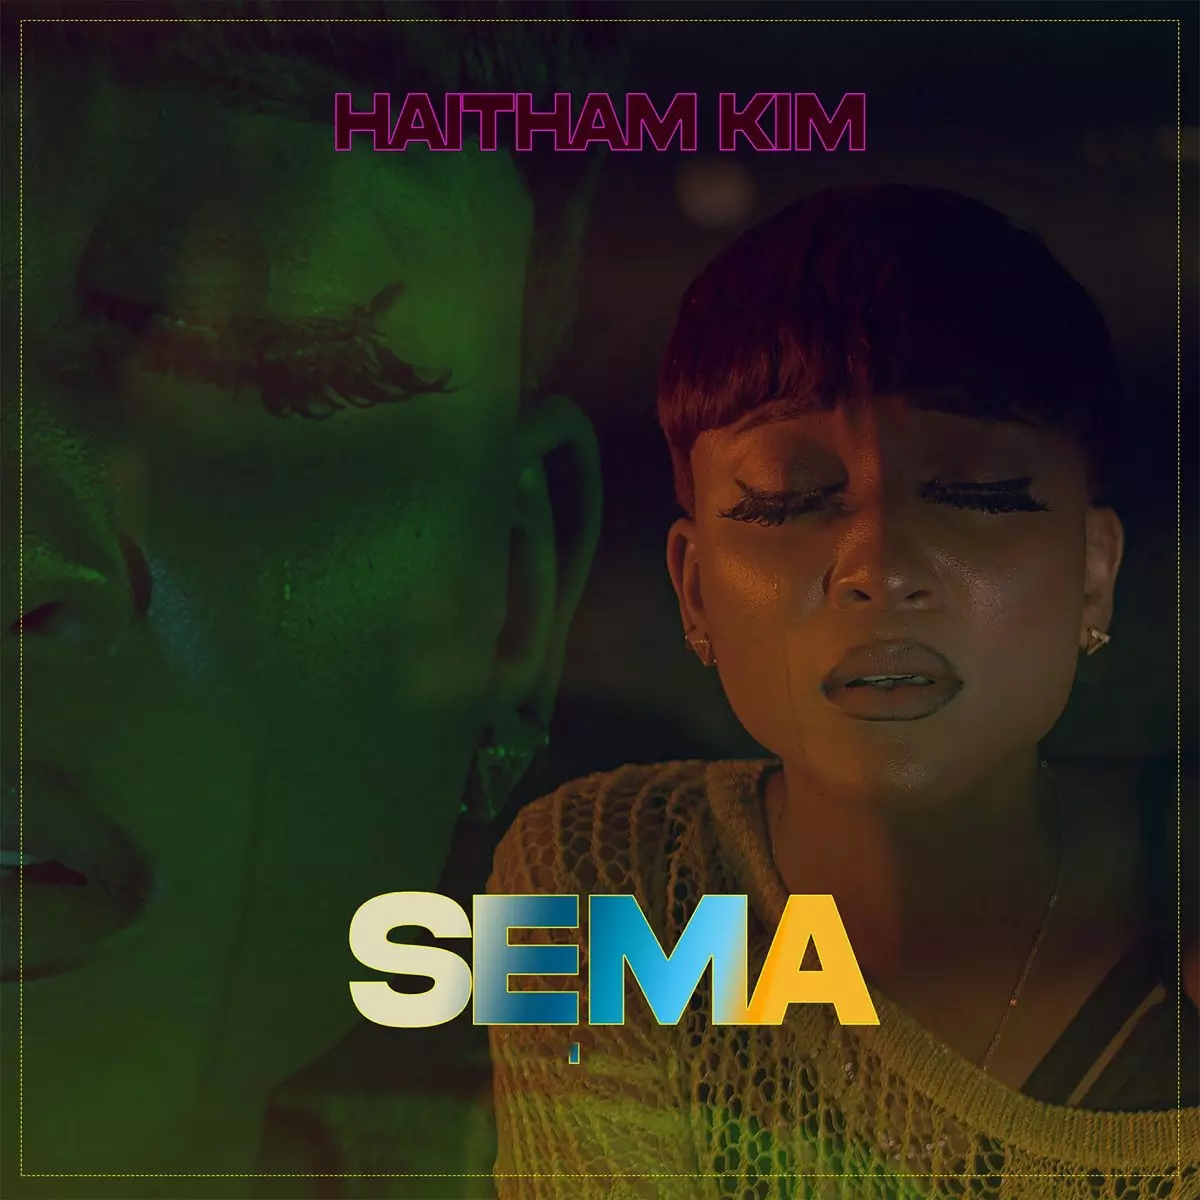 Sema - Single by Haitham Kim on Apple Music